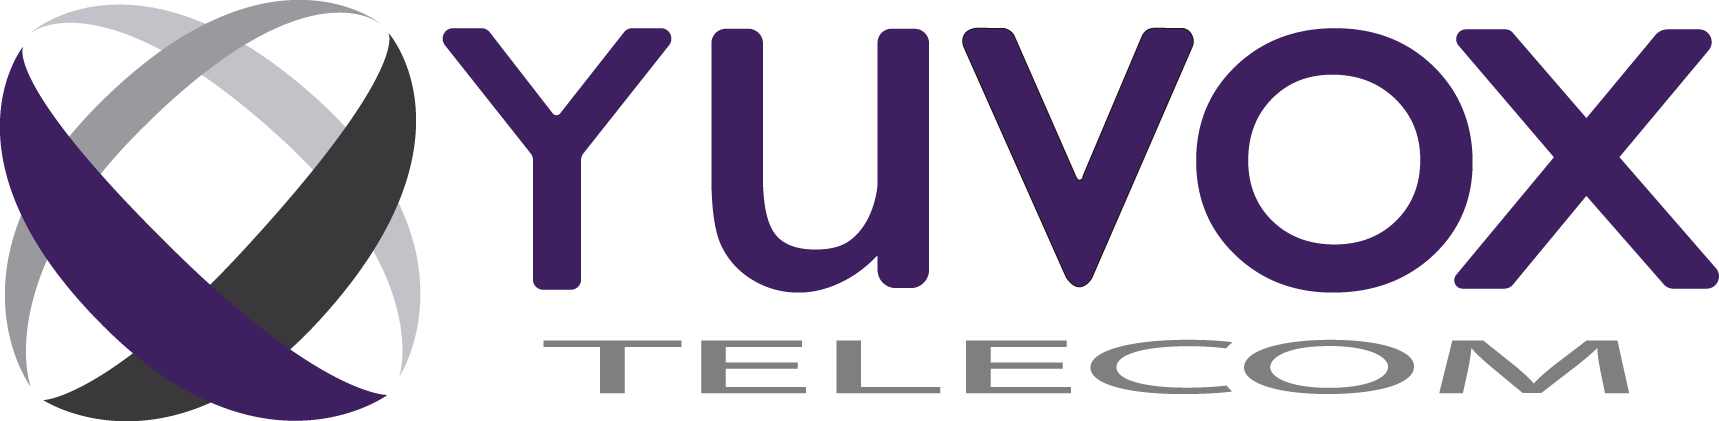 YUVOX Telecom